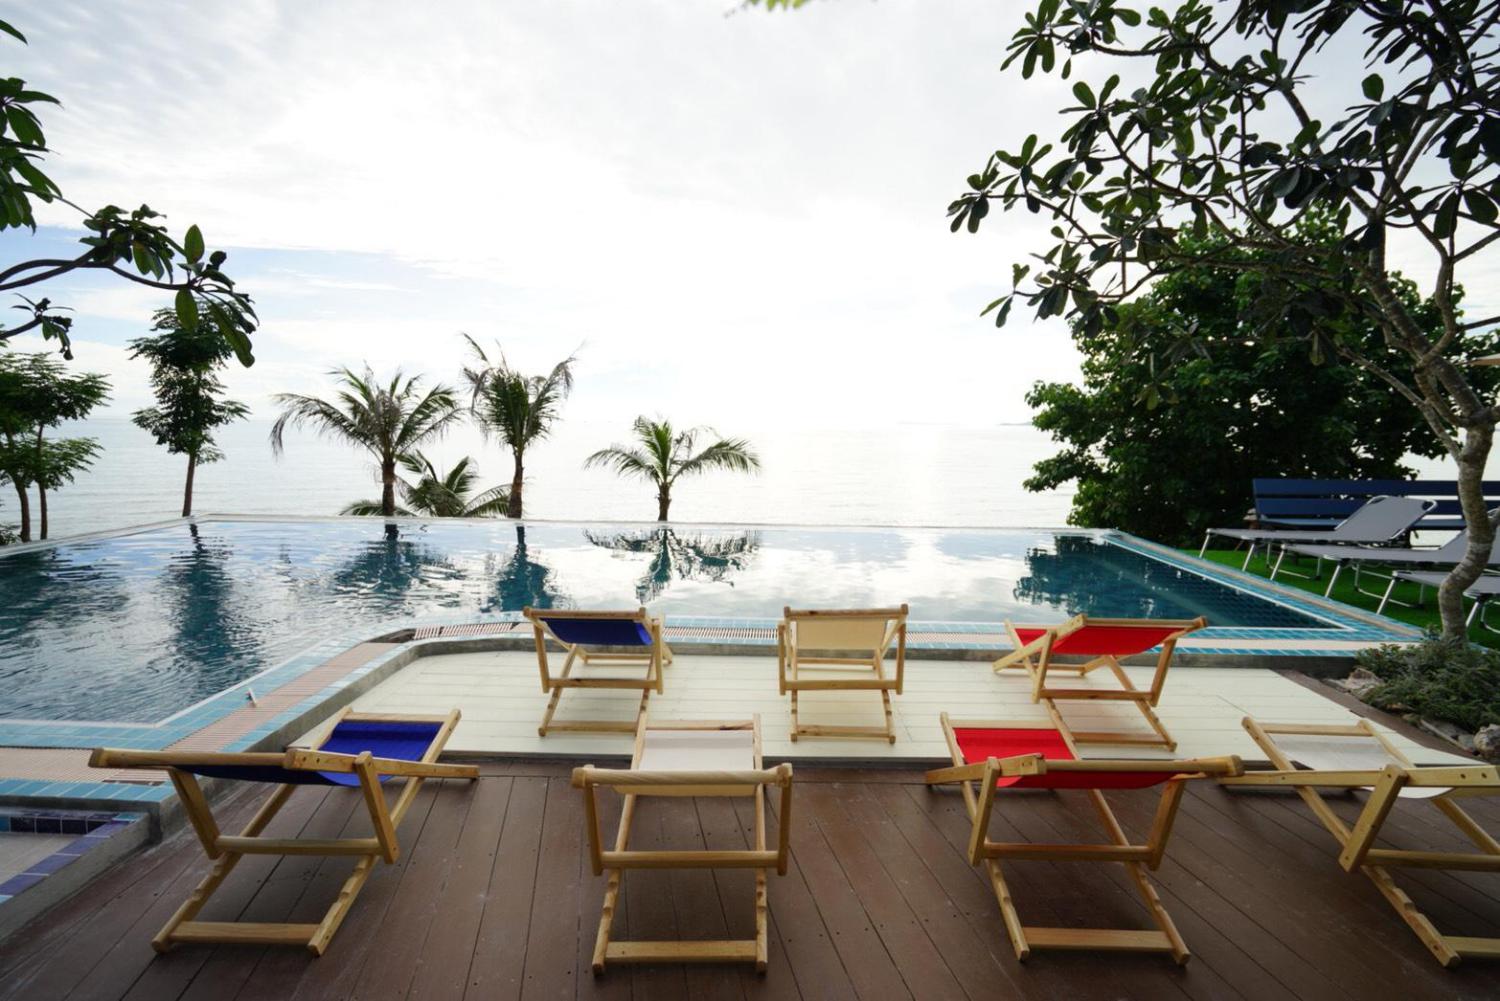 Pattaya Paradise Beach Resort - Image 0